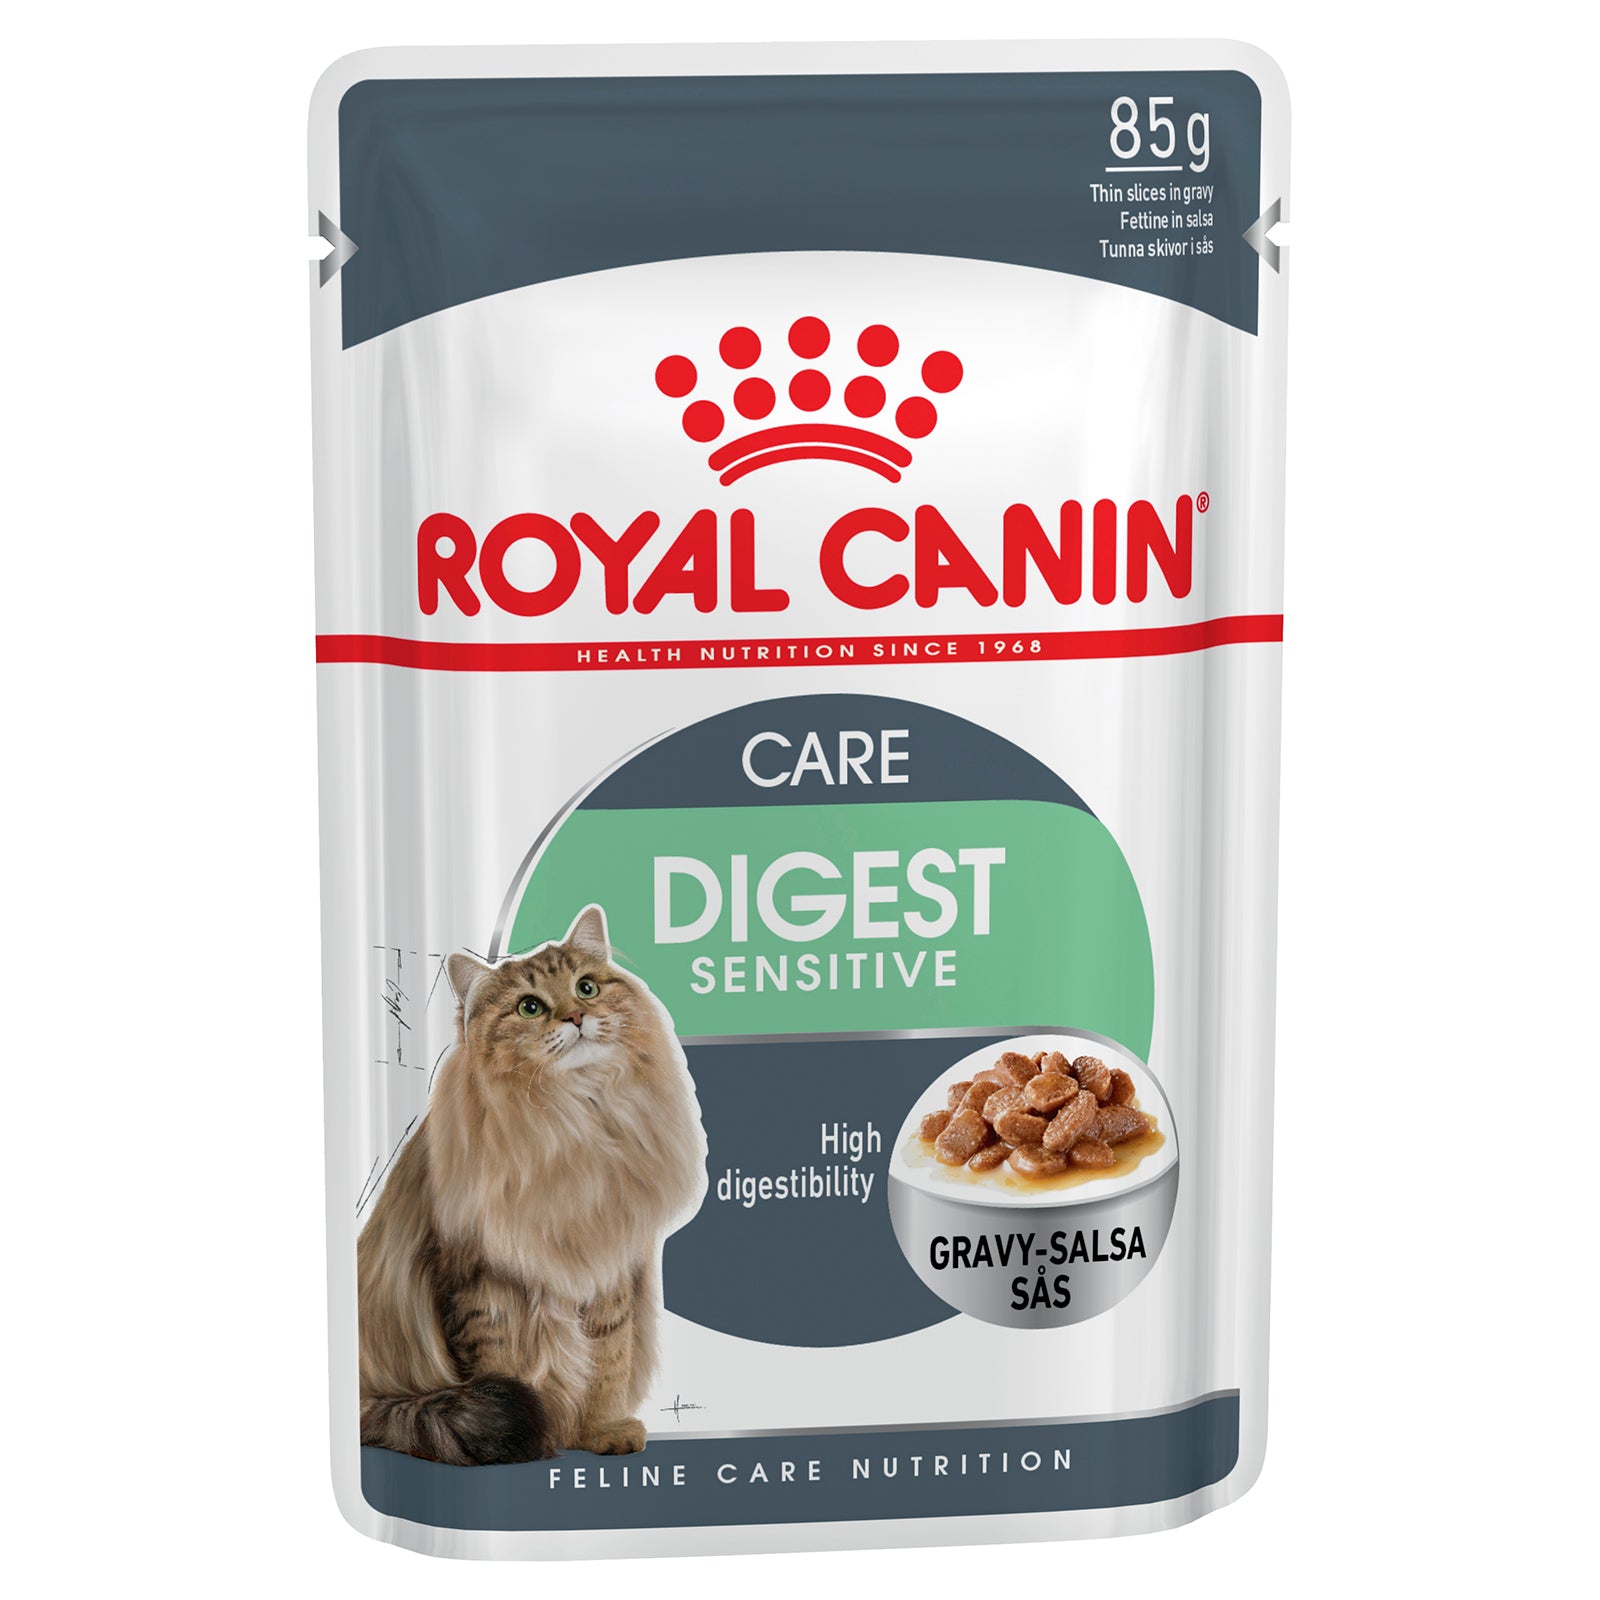 Royal Canin Cat Food Pouch Adult Digest Sensitive